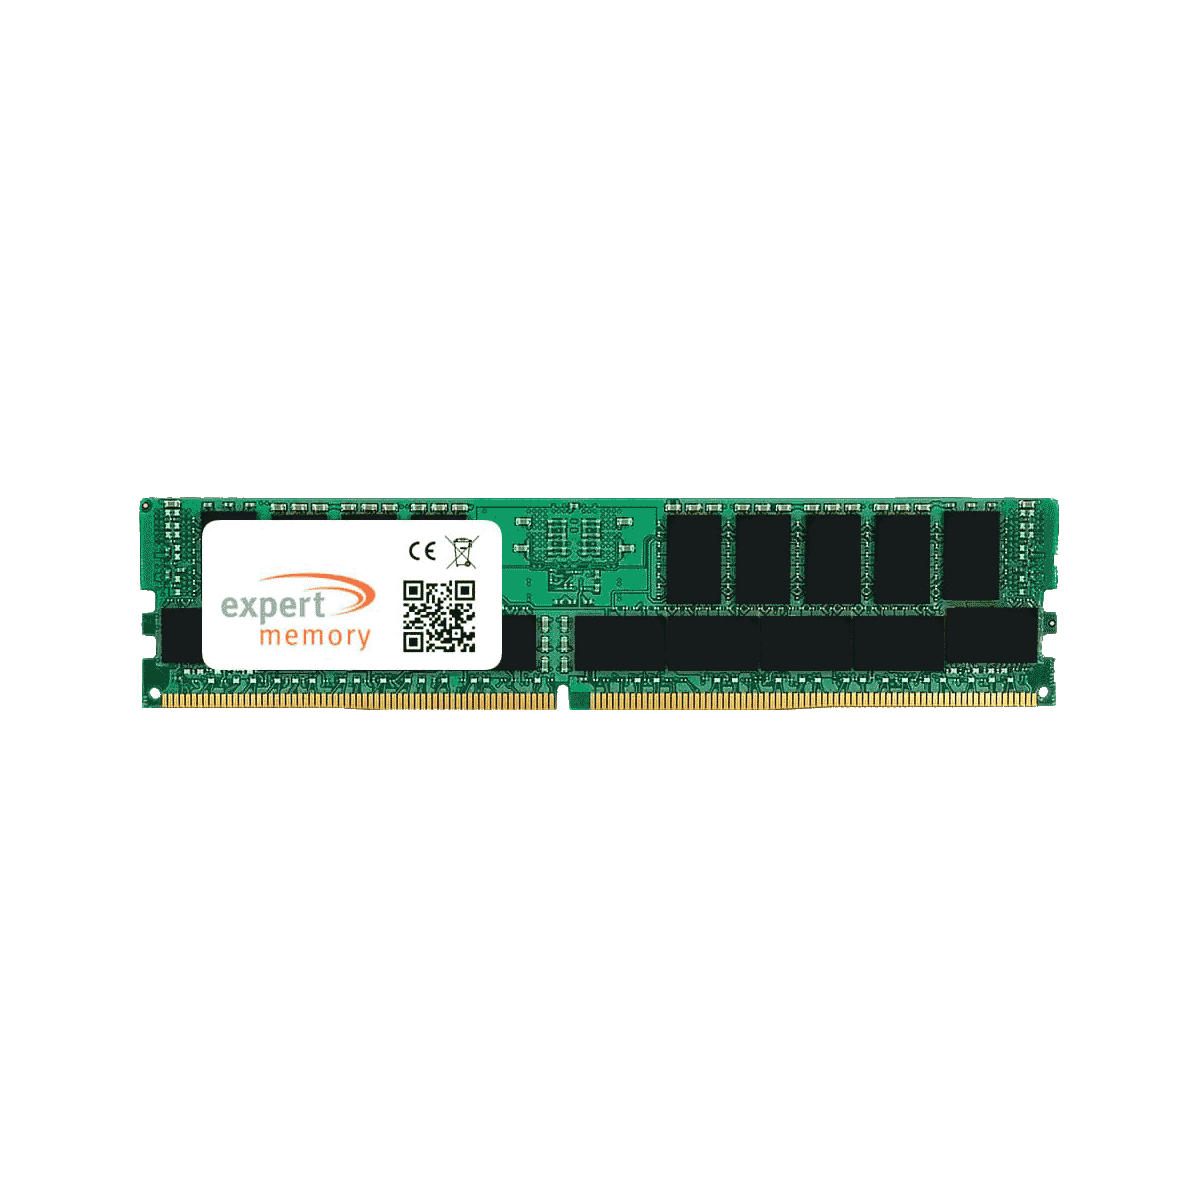 EXPERT MEMORY 16GB RDIMM 2133 2Rx4 Z10PA-U8 GB RAM 16 Asus Upgrade Workstation/Server DDR4 Z10PA-U8/10G-2S, Memory Mainboard